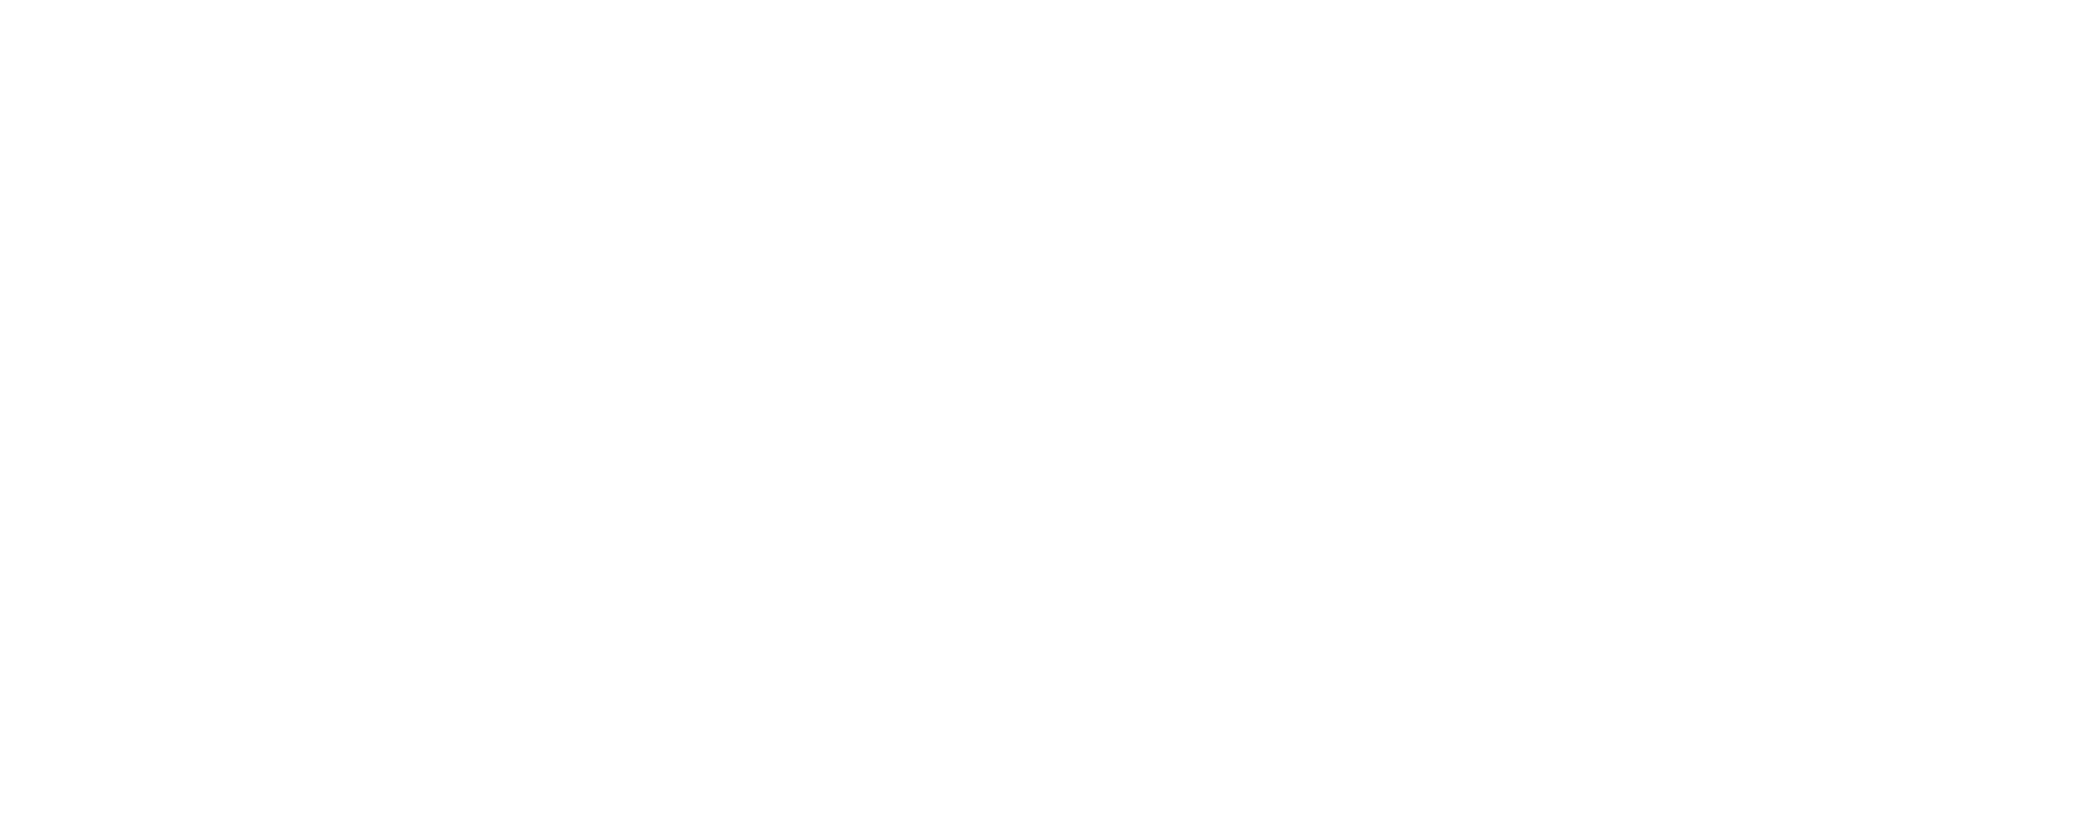 apple news logo